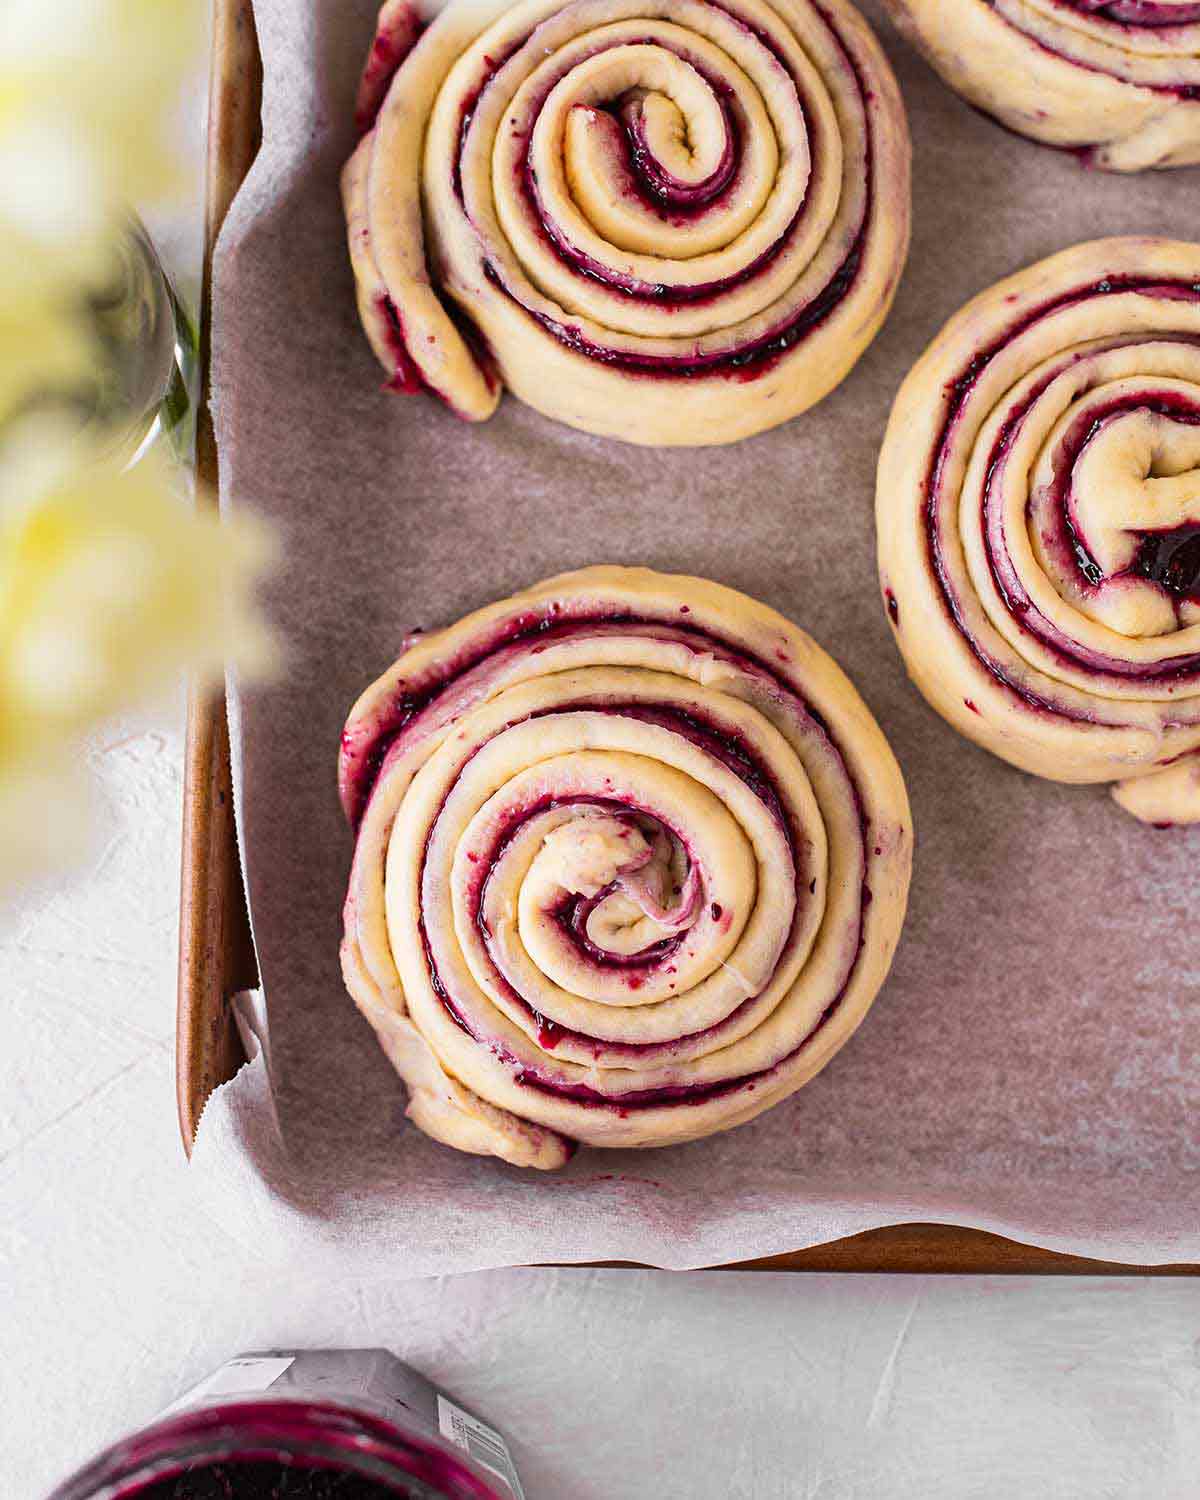 Unbaked berry swirl rolls on tray.